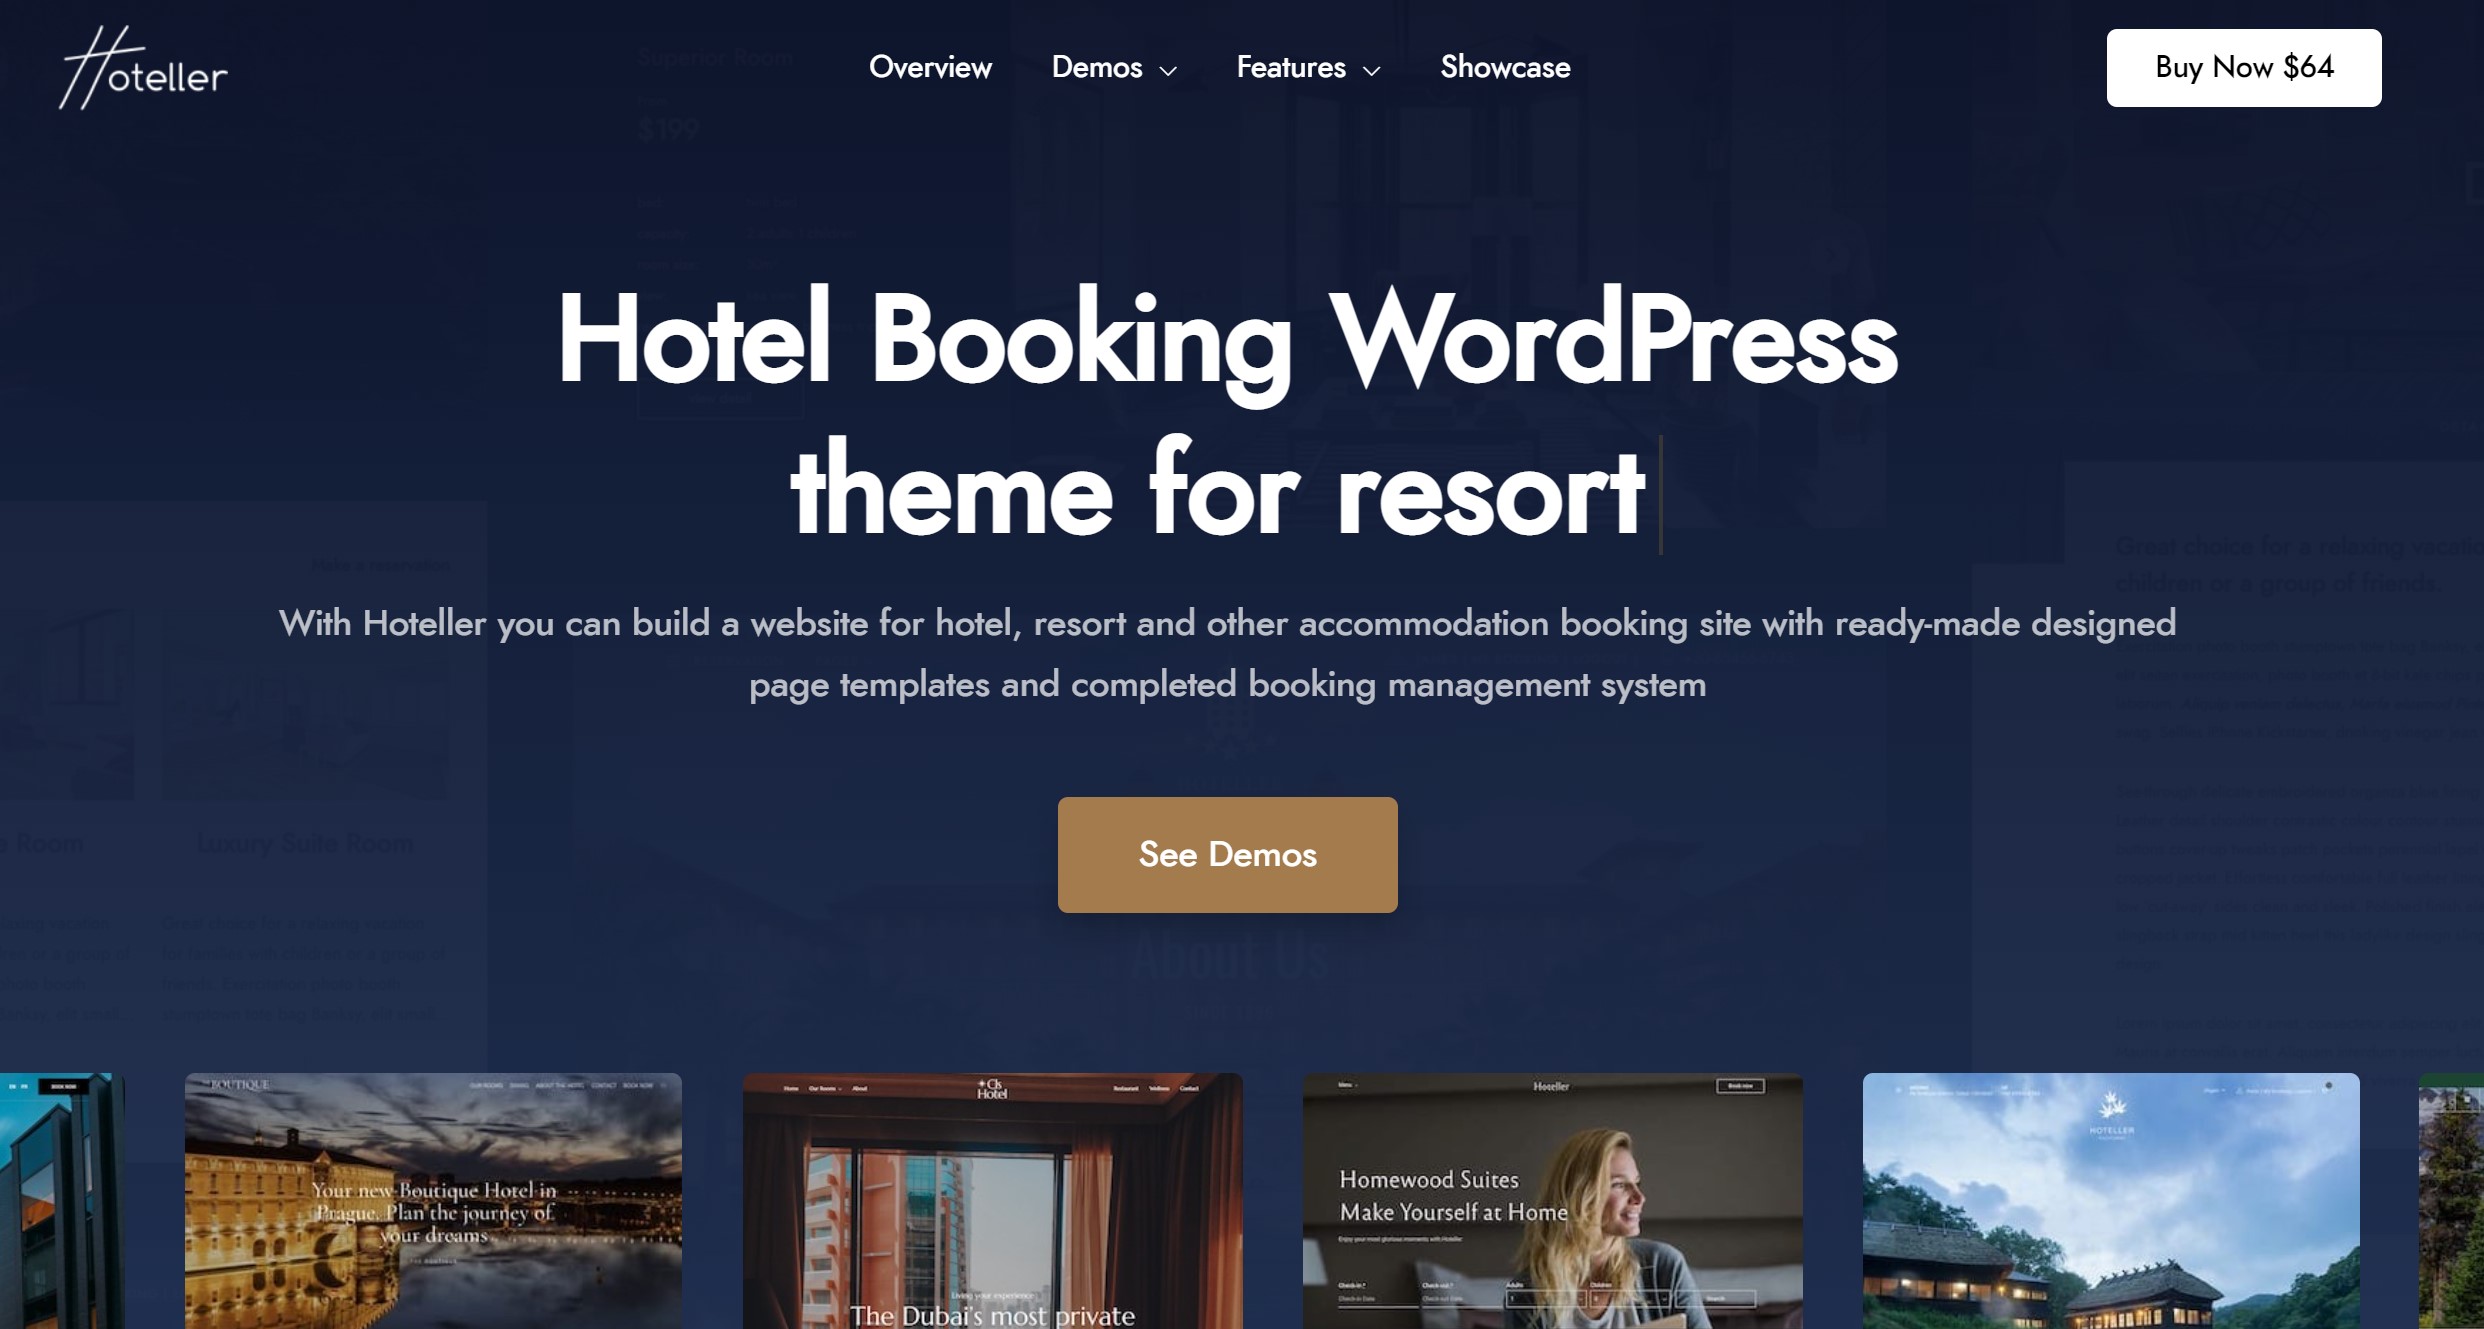 Hoteller 6.3 – Hotel Booking WordPress